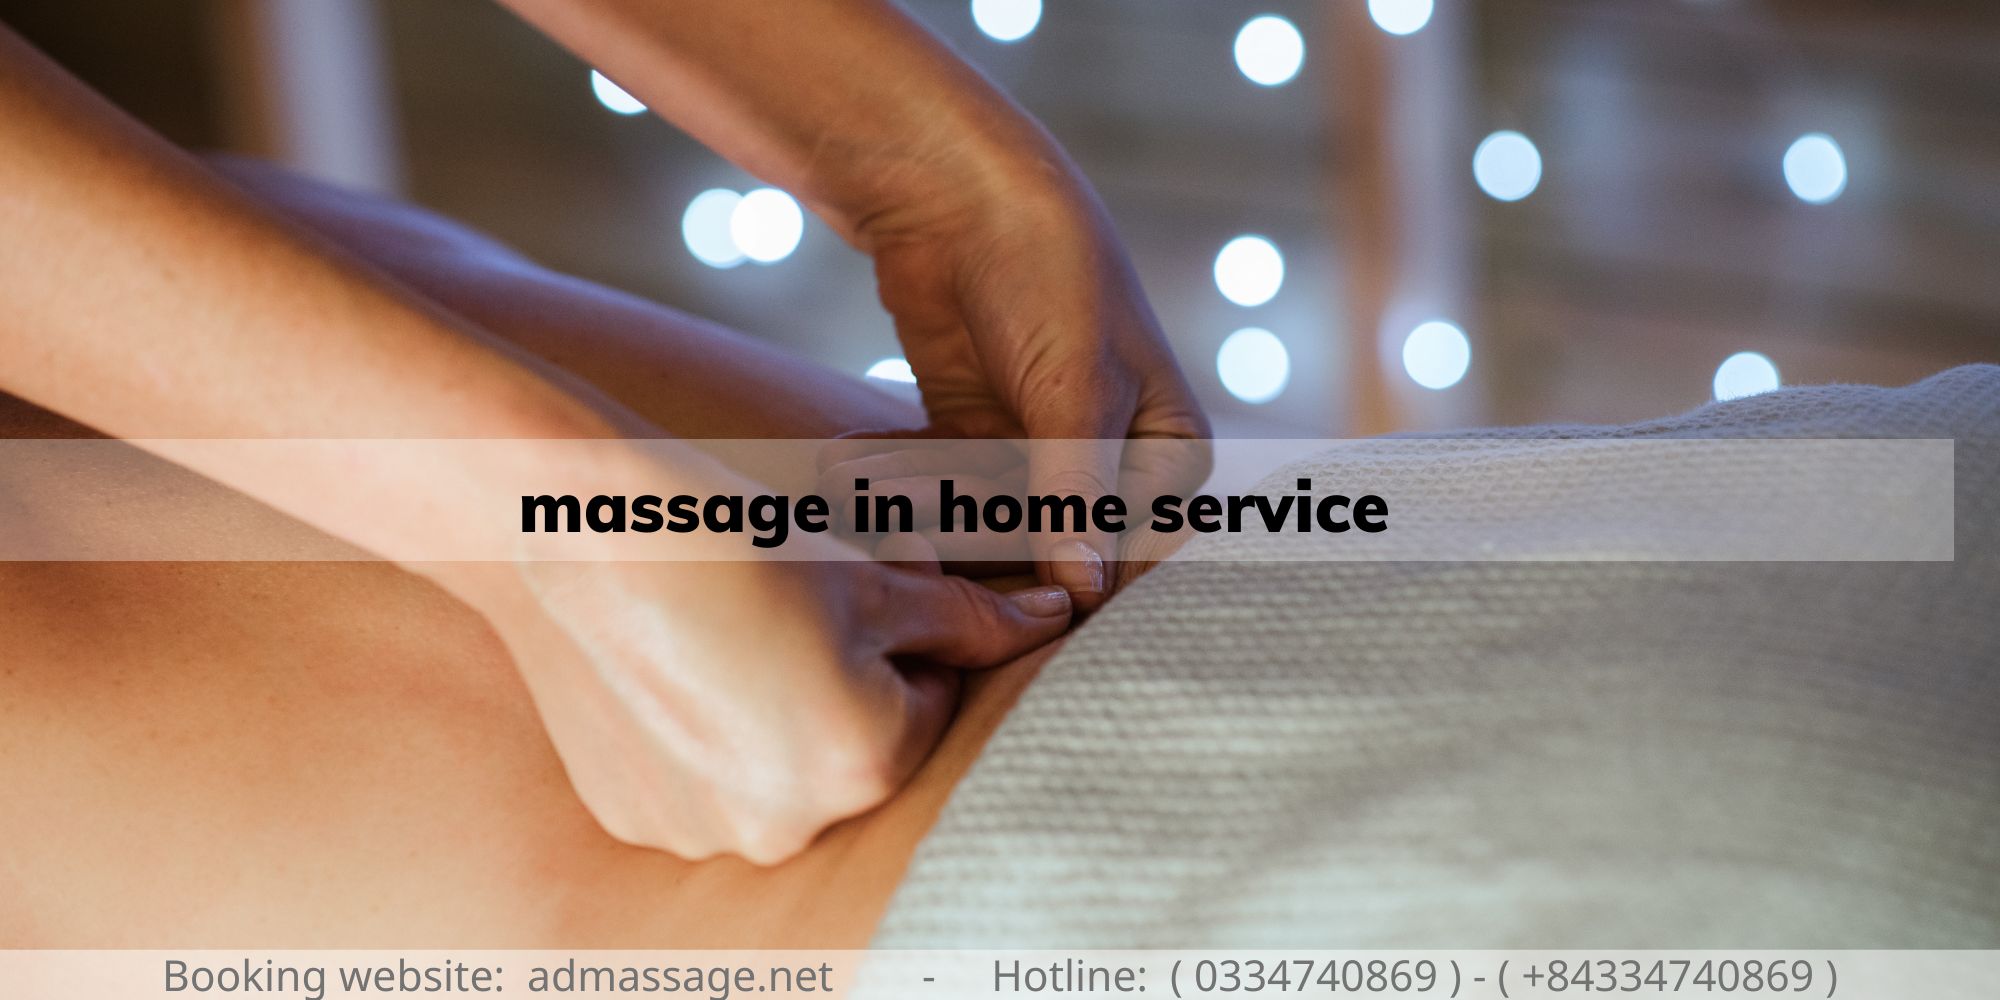 massage in home service